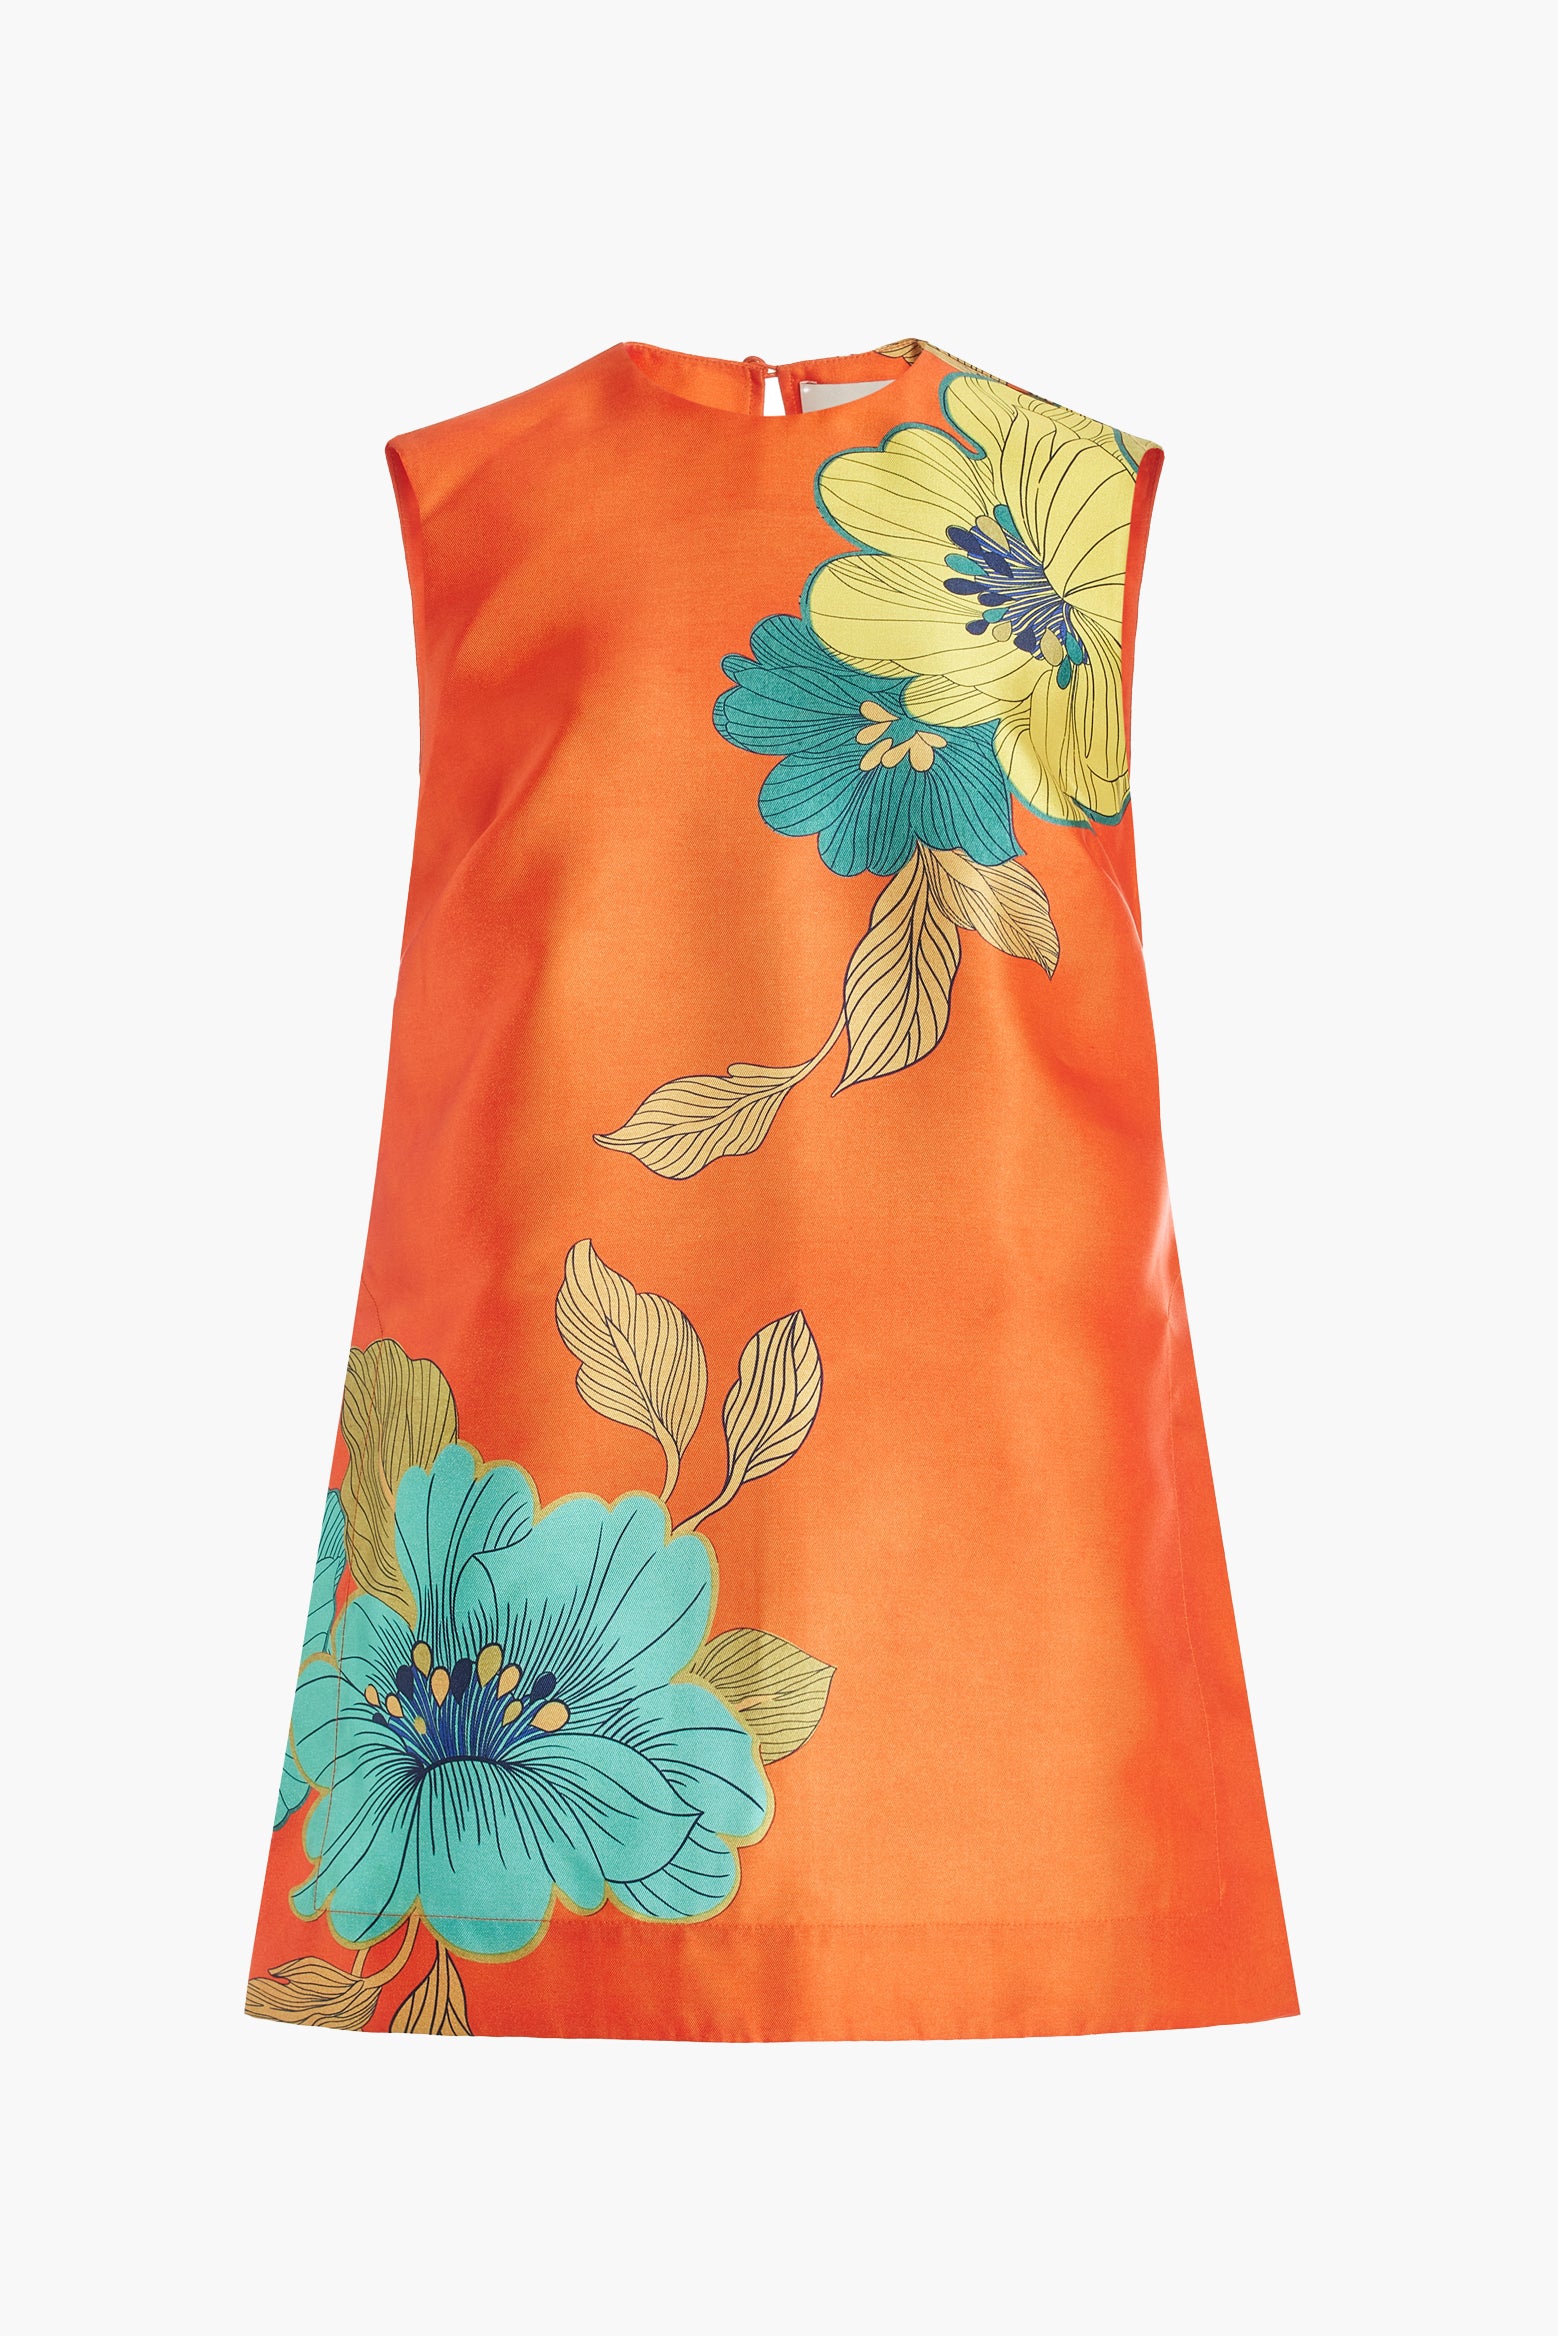 Alémais Piato Mini Dress in Marigold available at The New Trend Australia. 